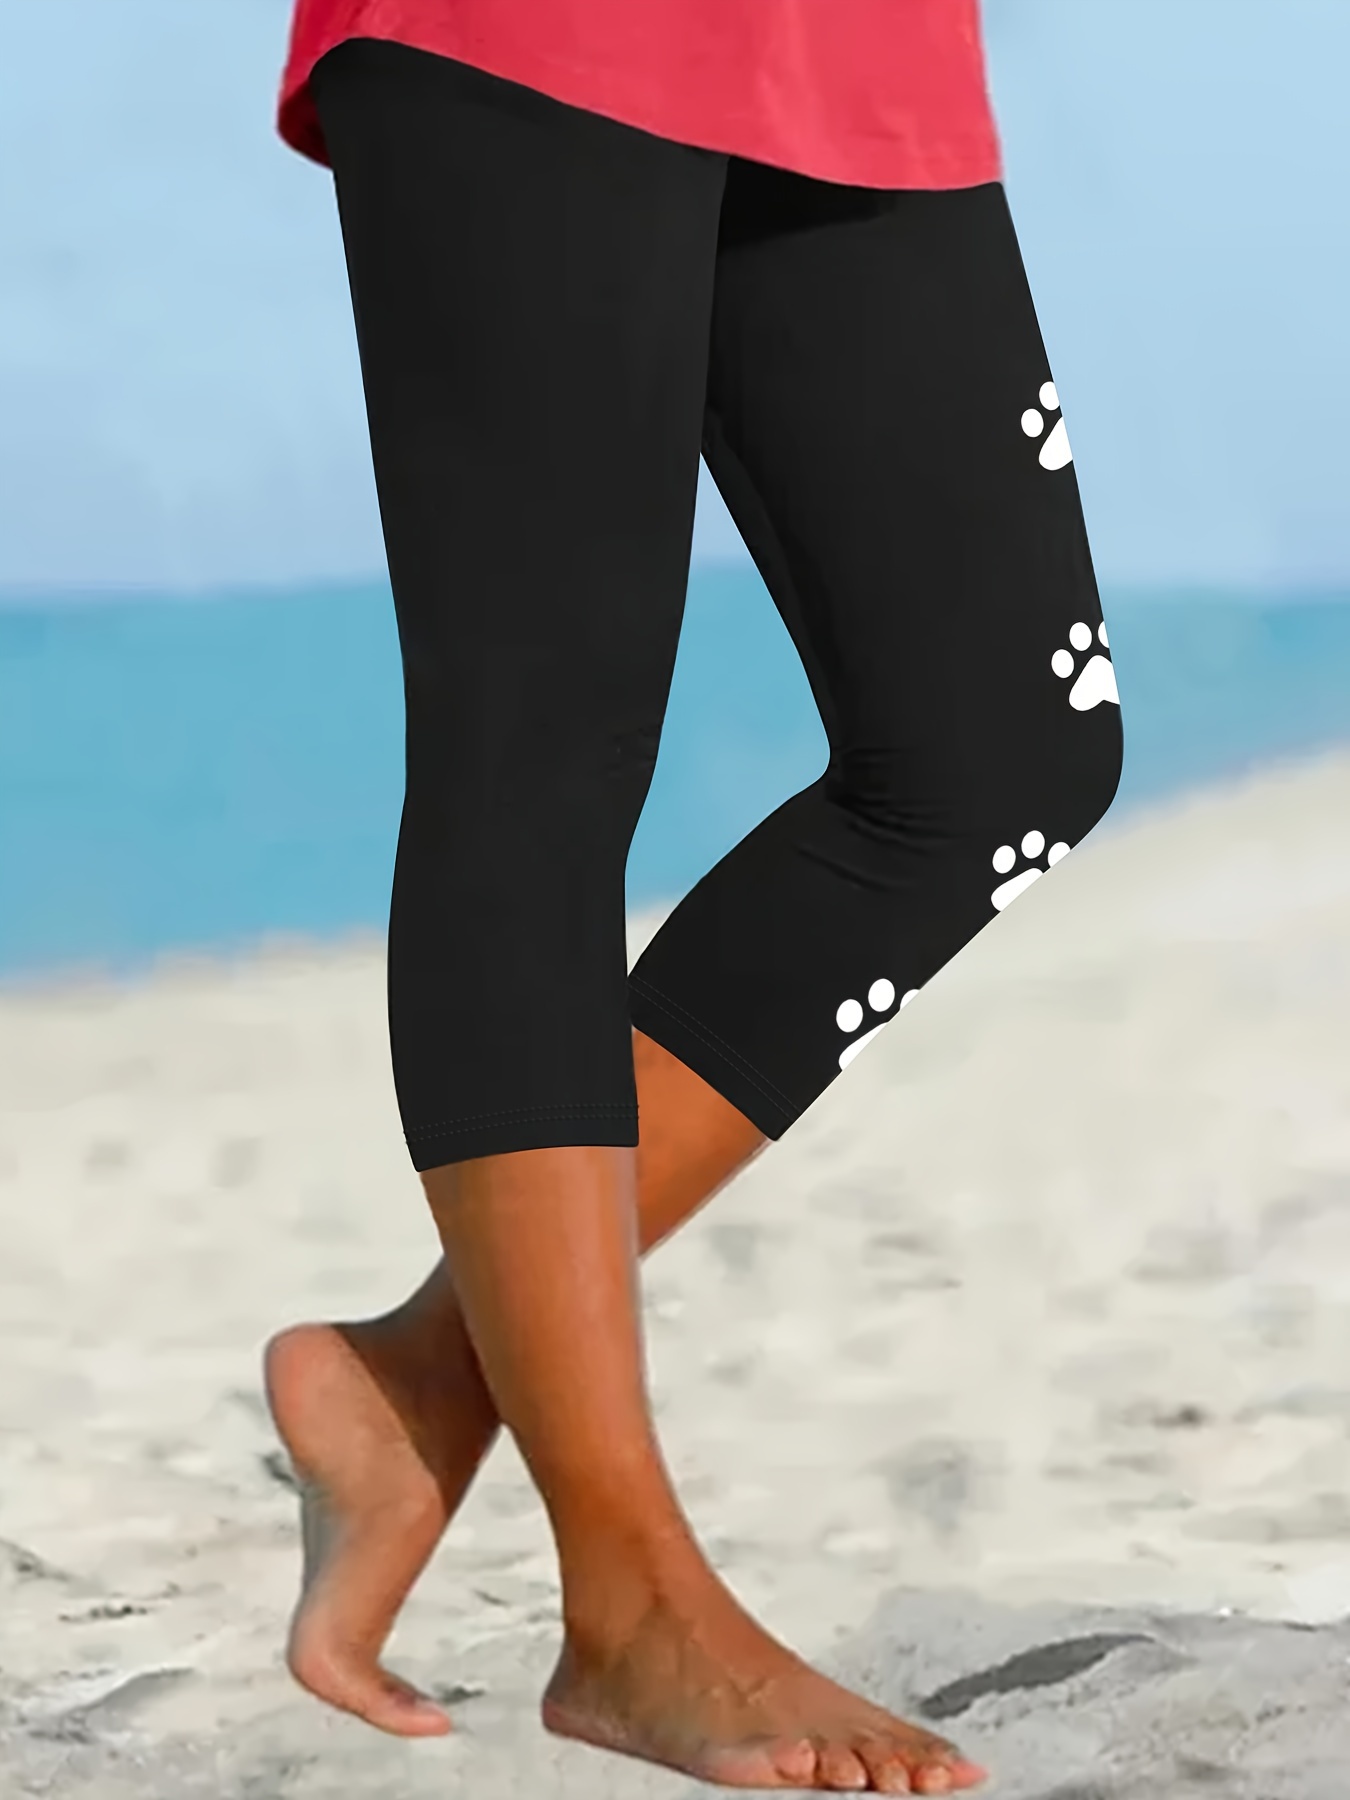 DGZTWLL Womens Capri Pants for Summer Dressy Elastic Waist Sports Outdoor  Athletic Travel Crop Work Leggings with Pockets, Black-b, Small